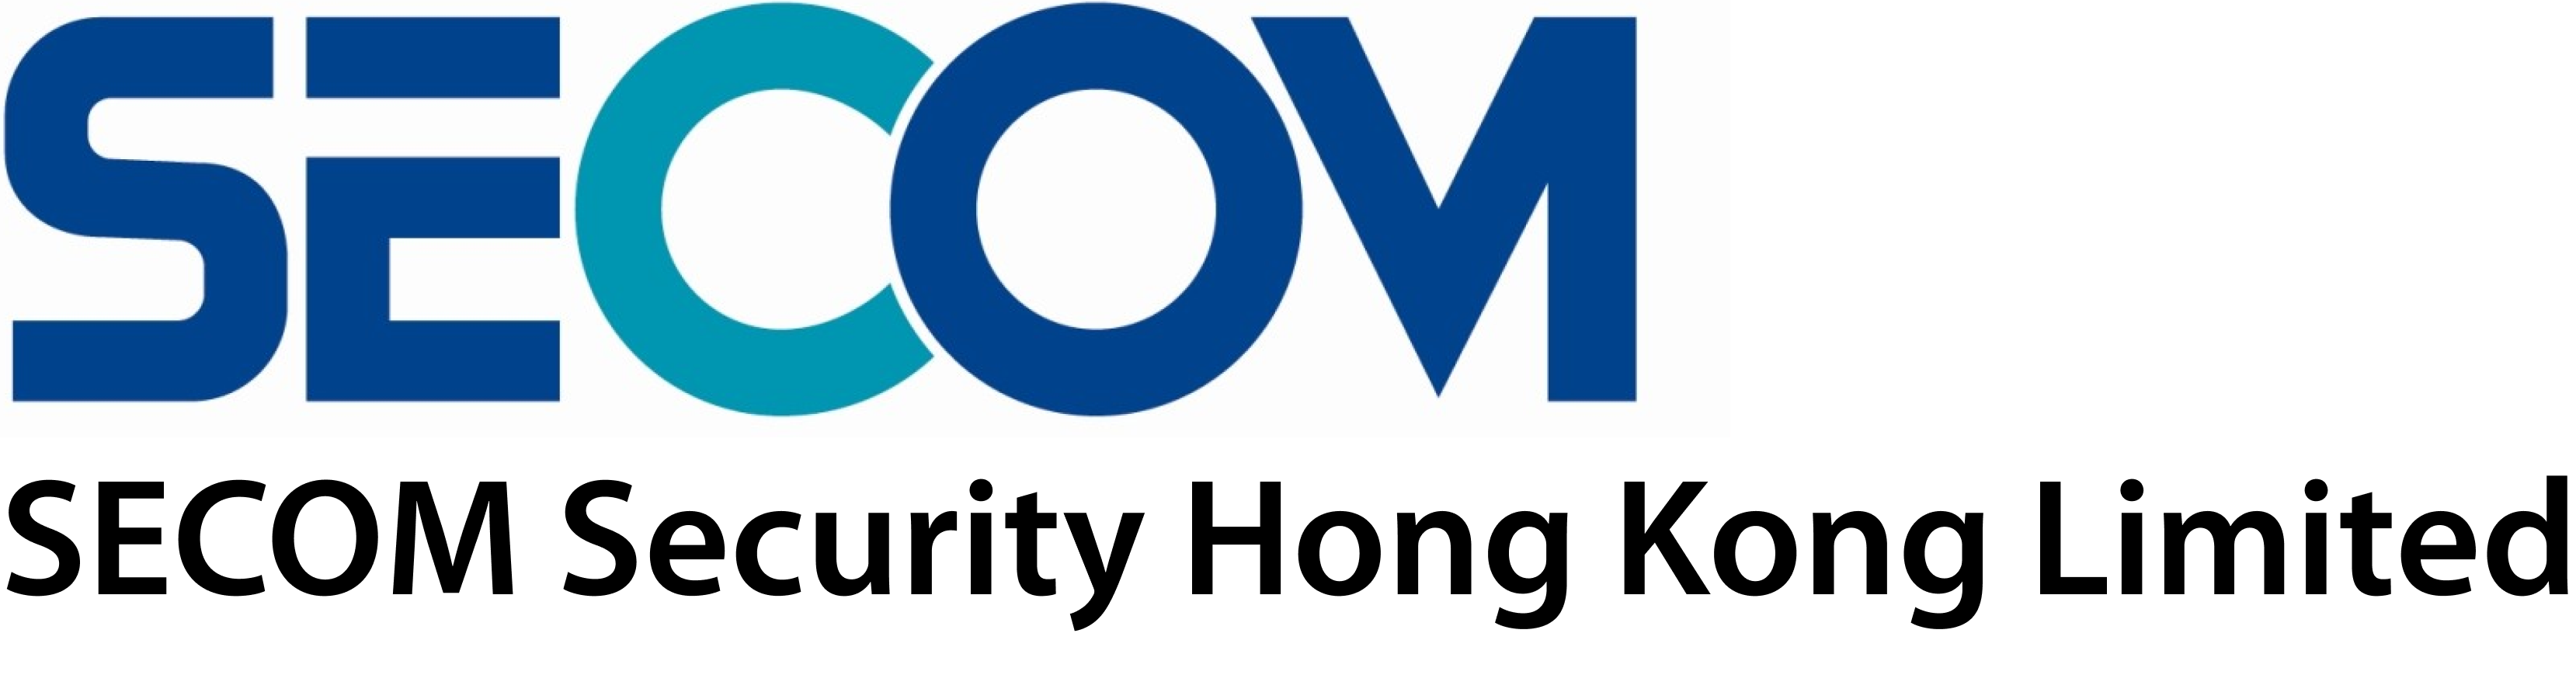 SECOM Security Hong Kong Limited